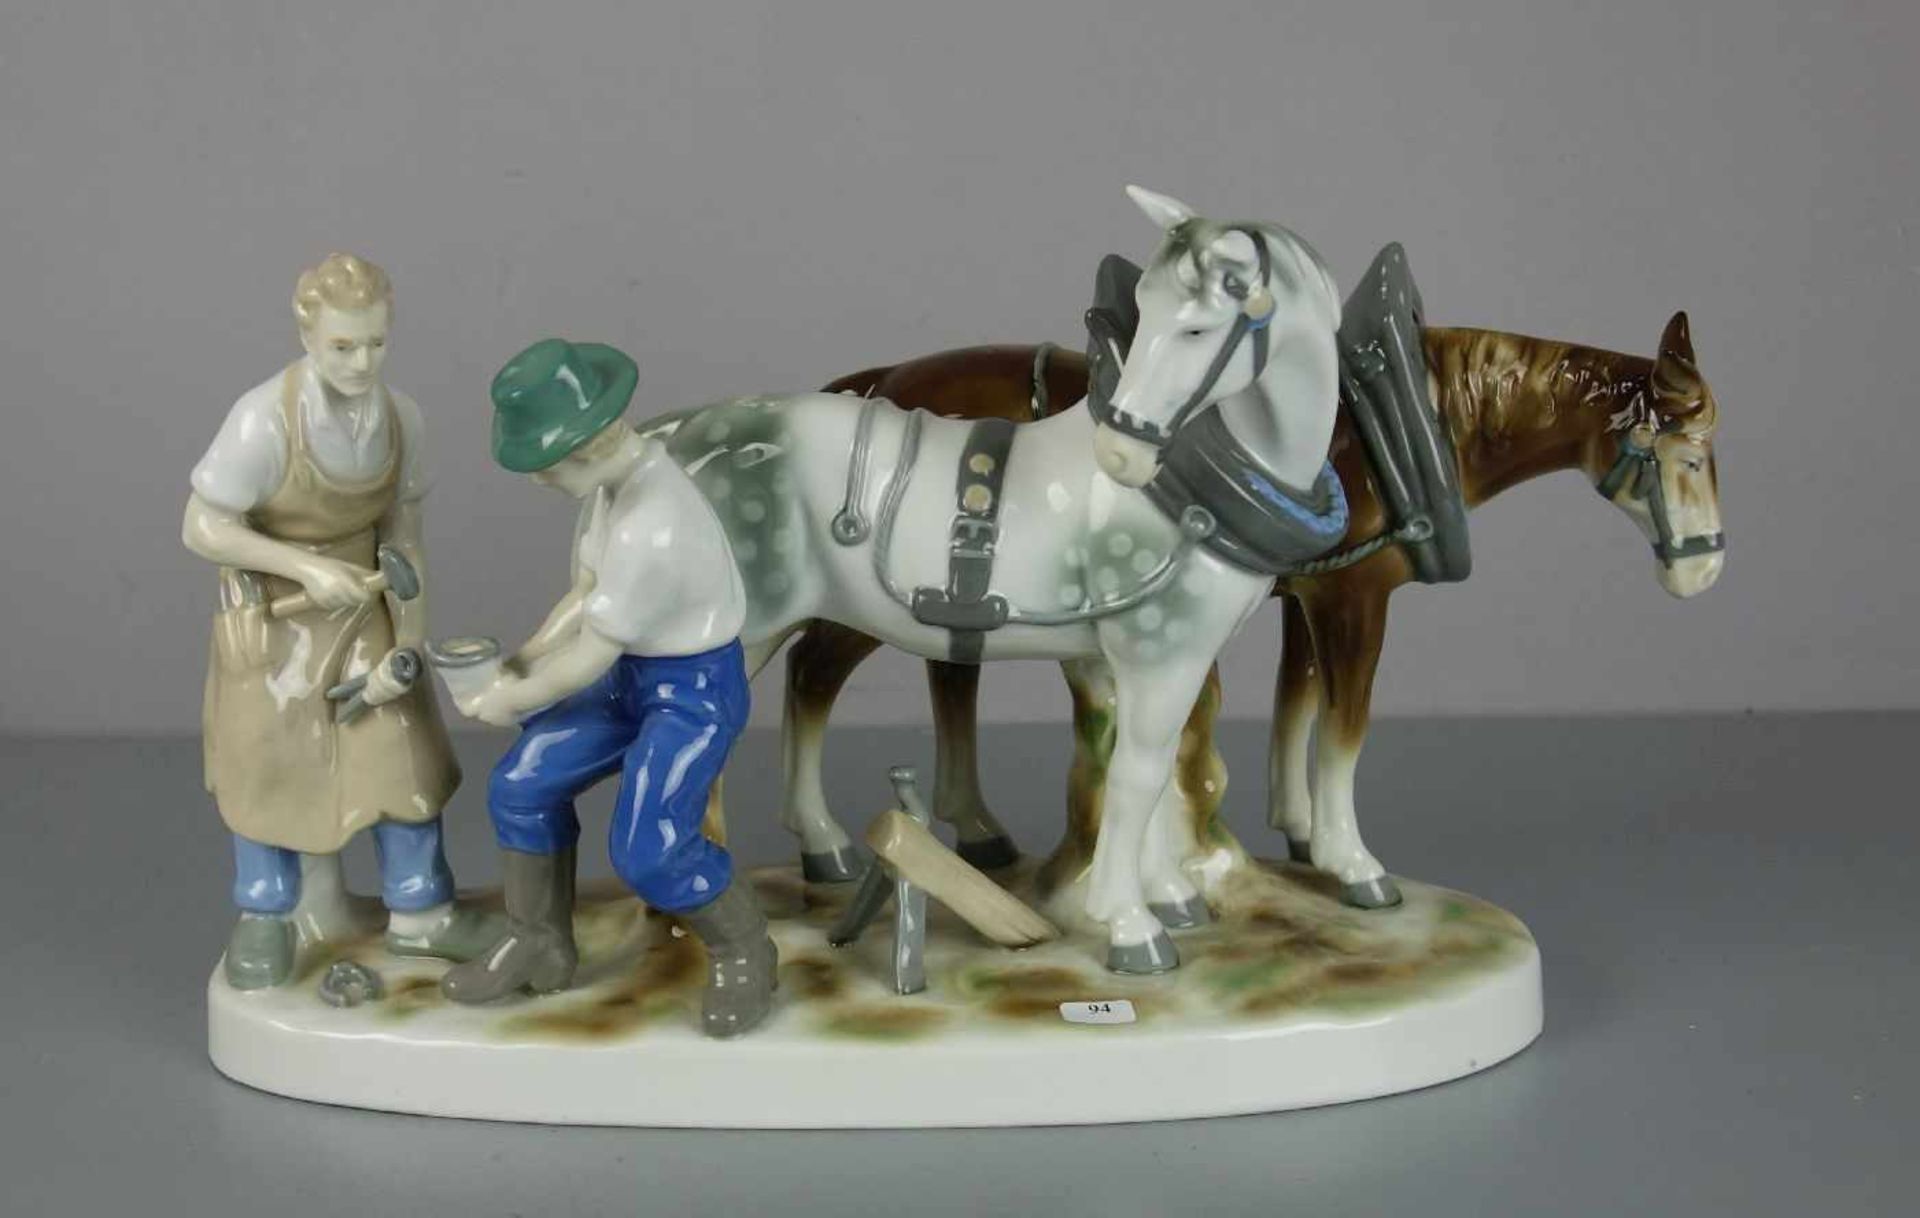 FIGURENGRUPPE: "Beim Schmied" / porcelain figures, Porzellan, Manufaktur Gräfenthal, Thüringen,